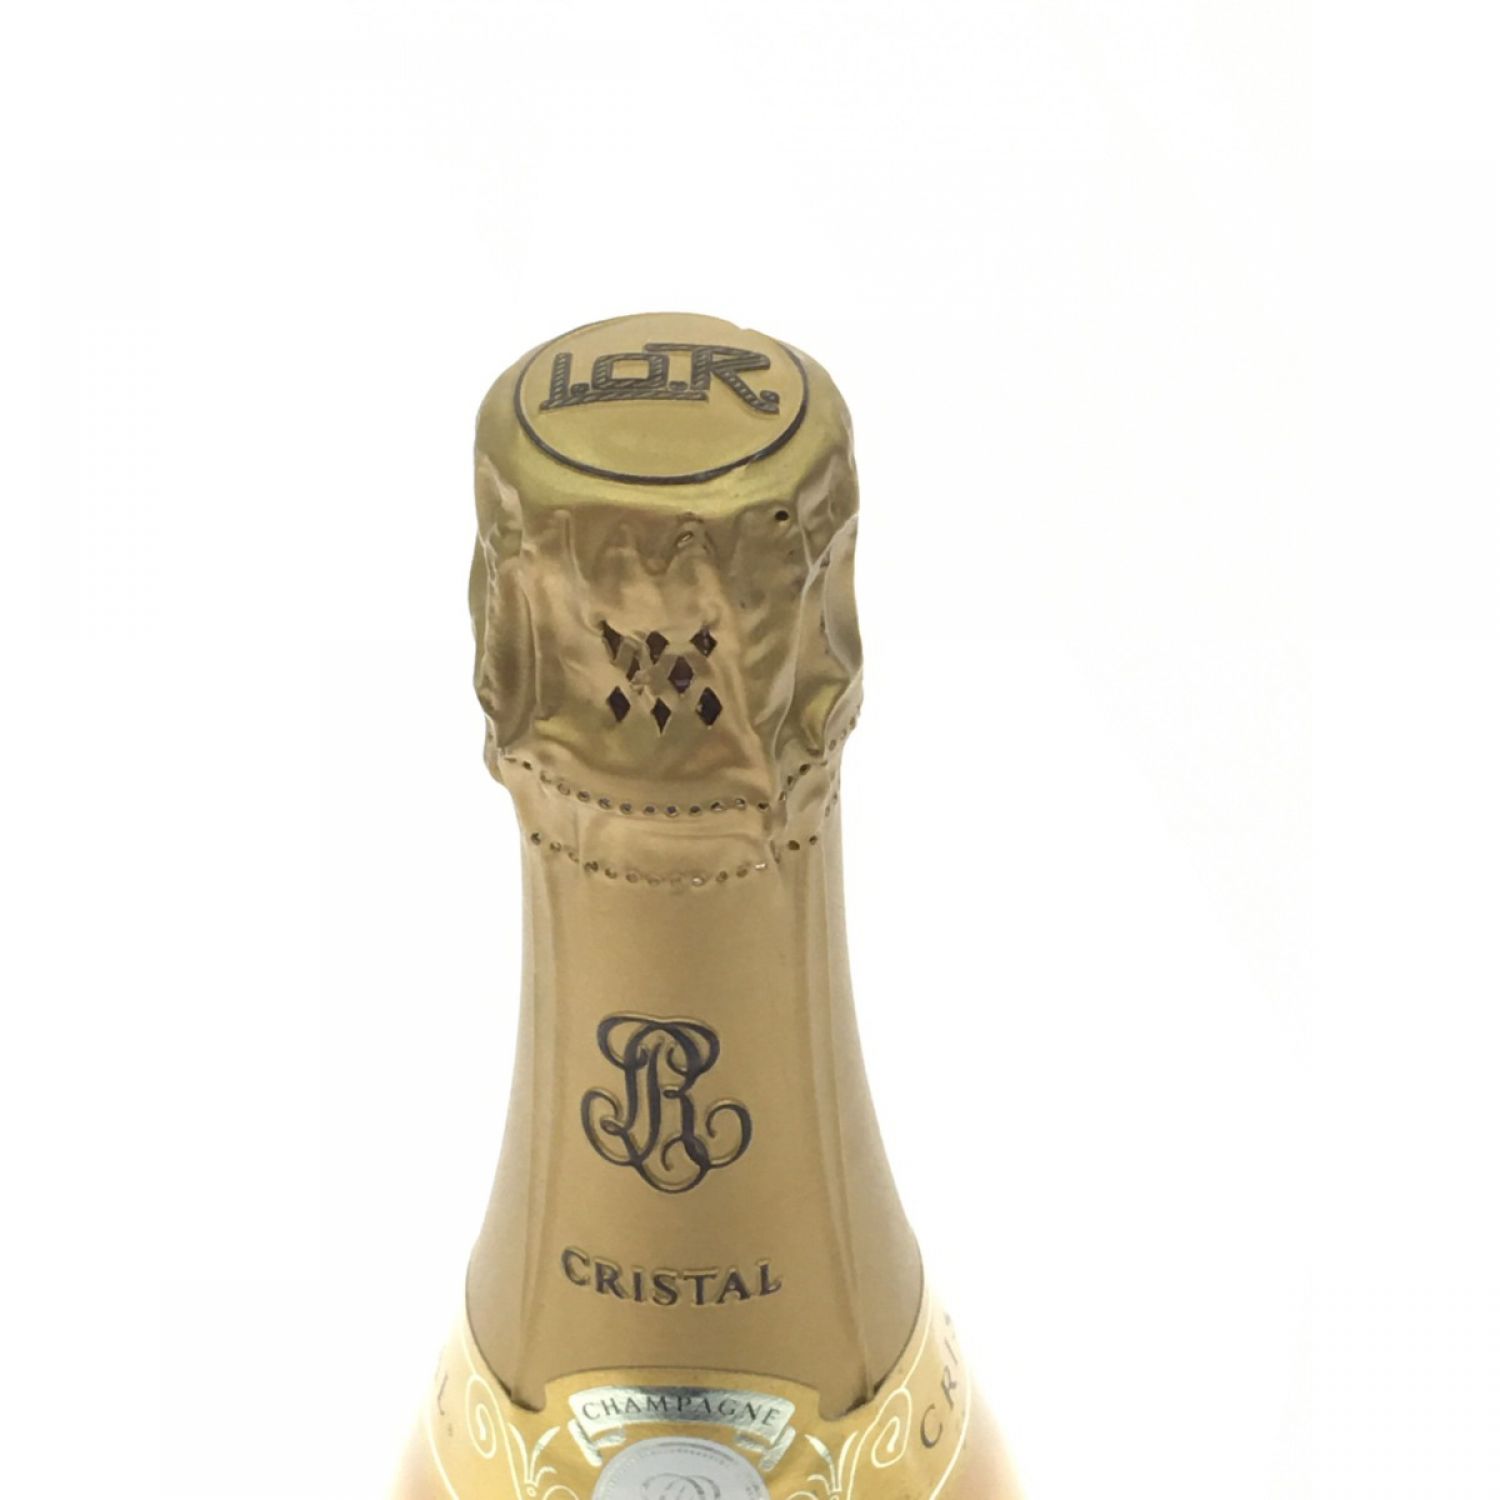 ▼▼LOUIS ROEDERER 果実酒 シャンパン 750ml クリスタル ブリュット 2012 12%